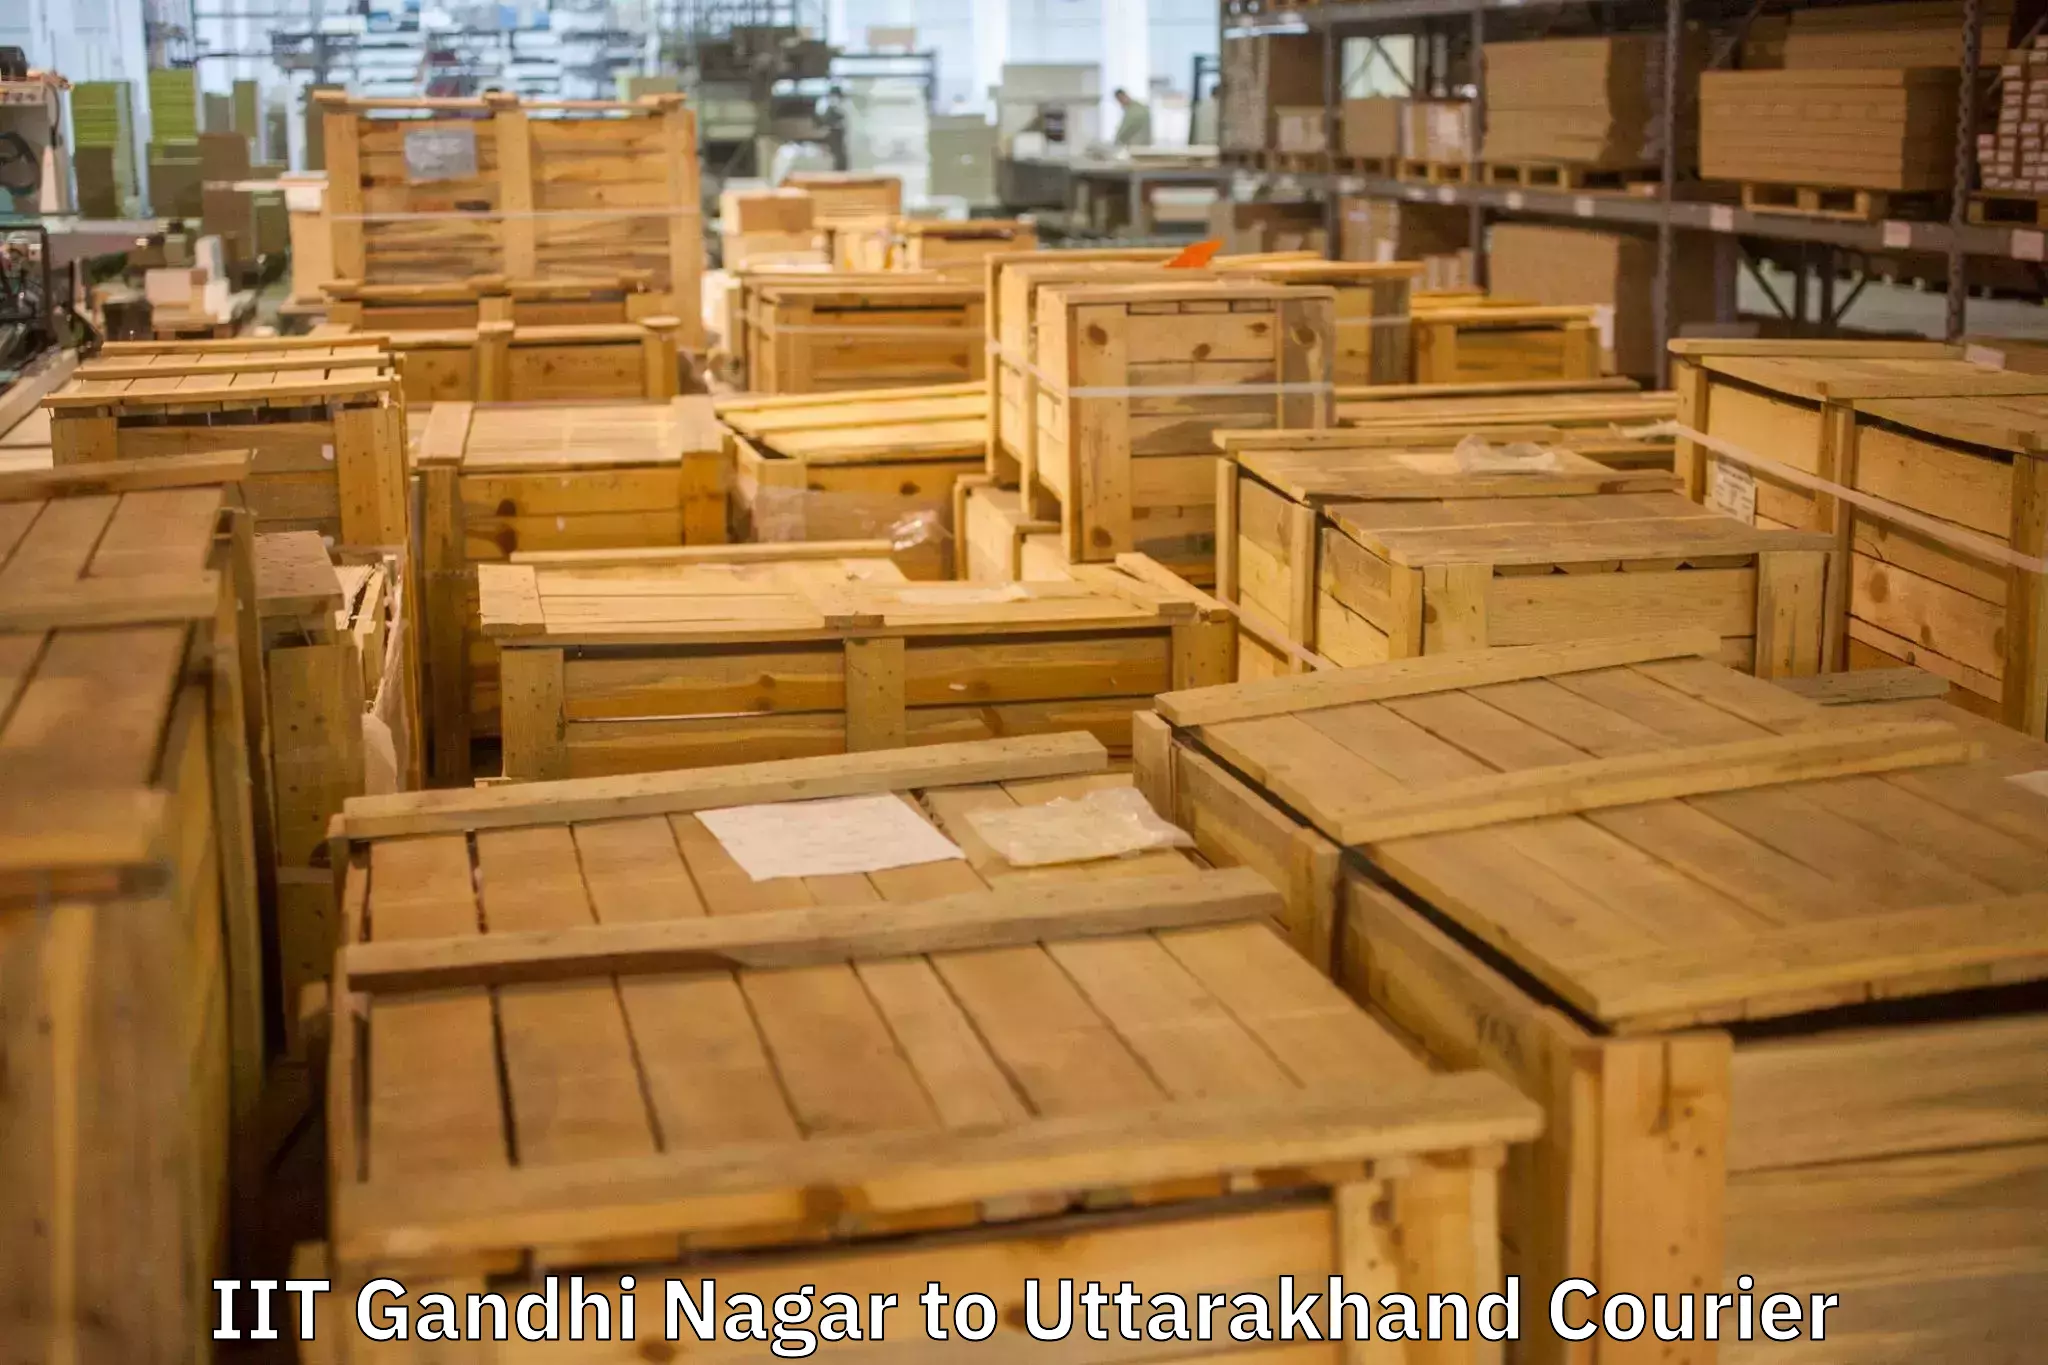 Moving and packing experts IIT Gandhi Nagar to Tehri